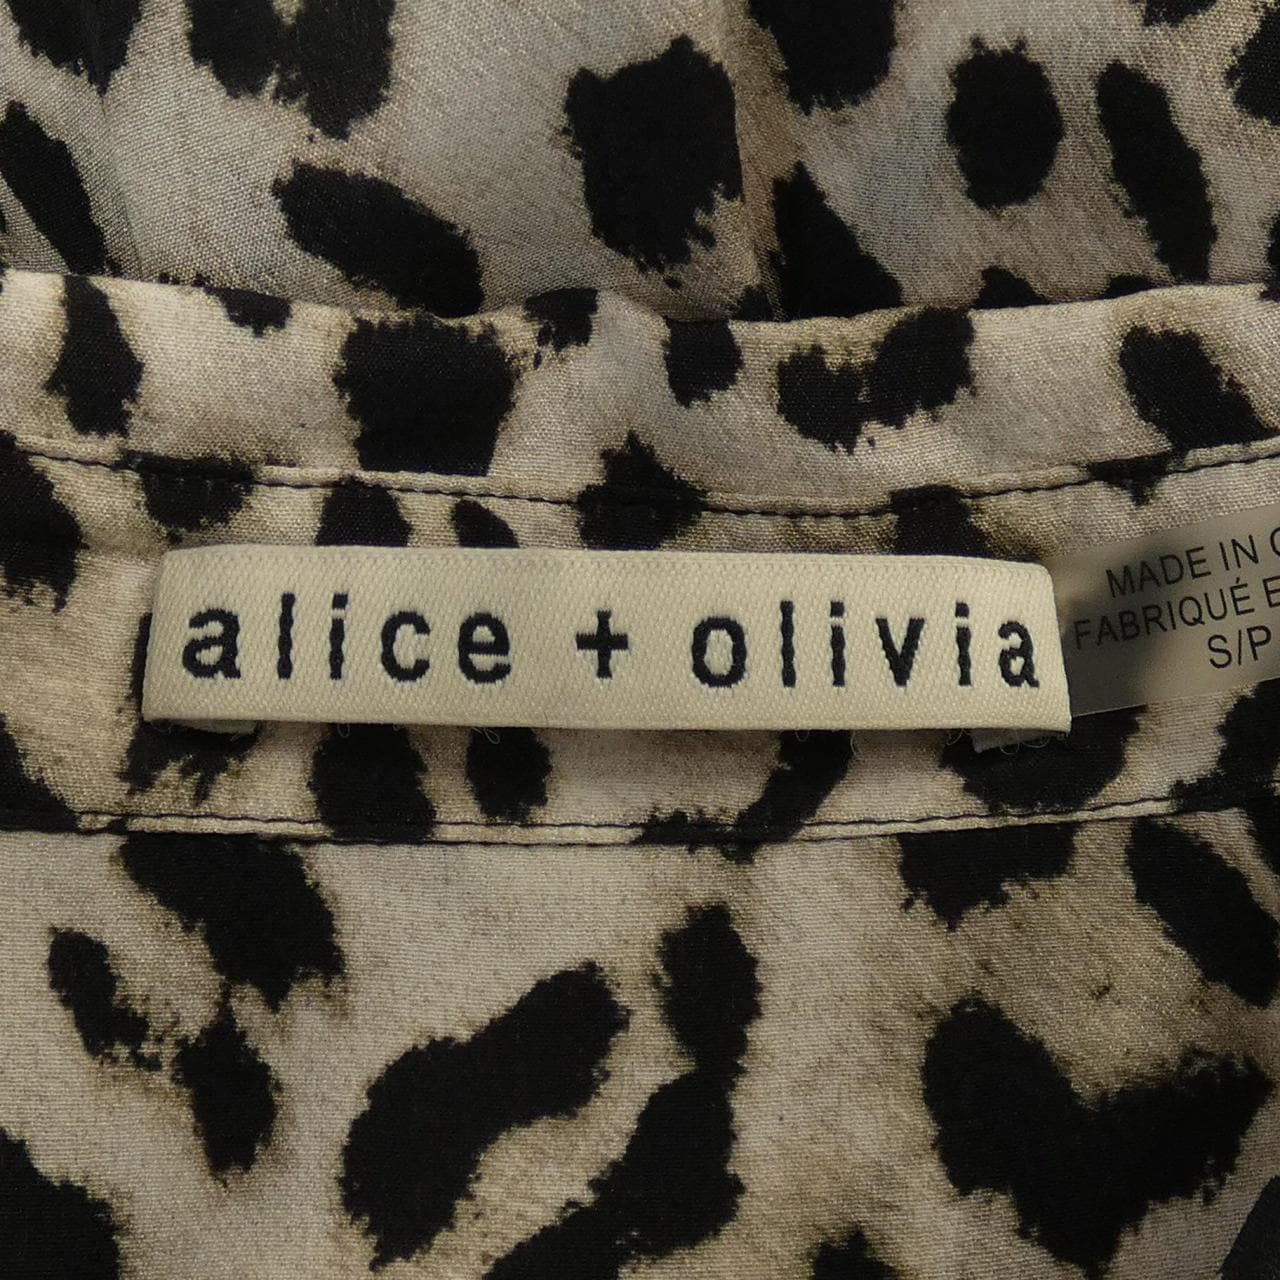 Alice and Olivia ALICE+OLIVIA shirt